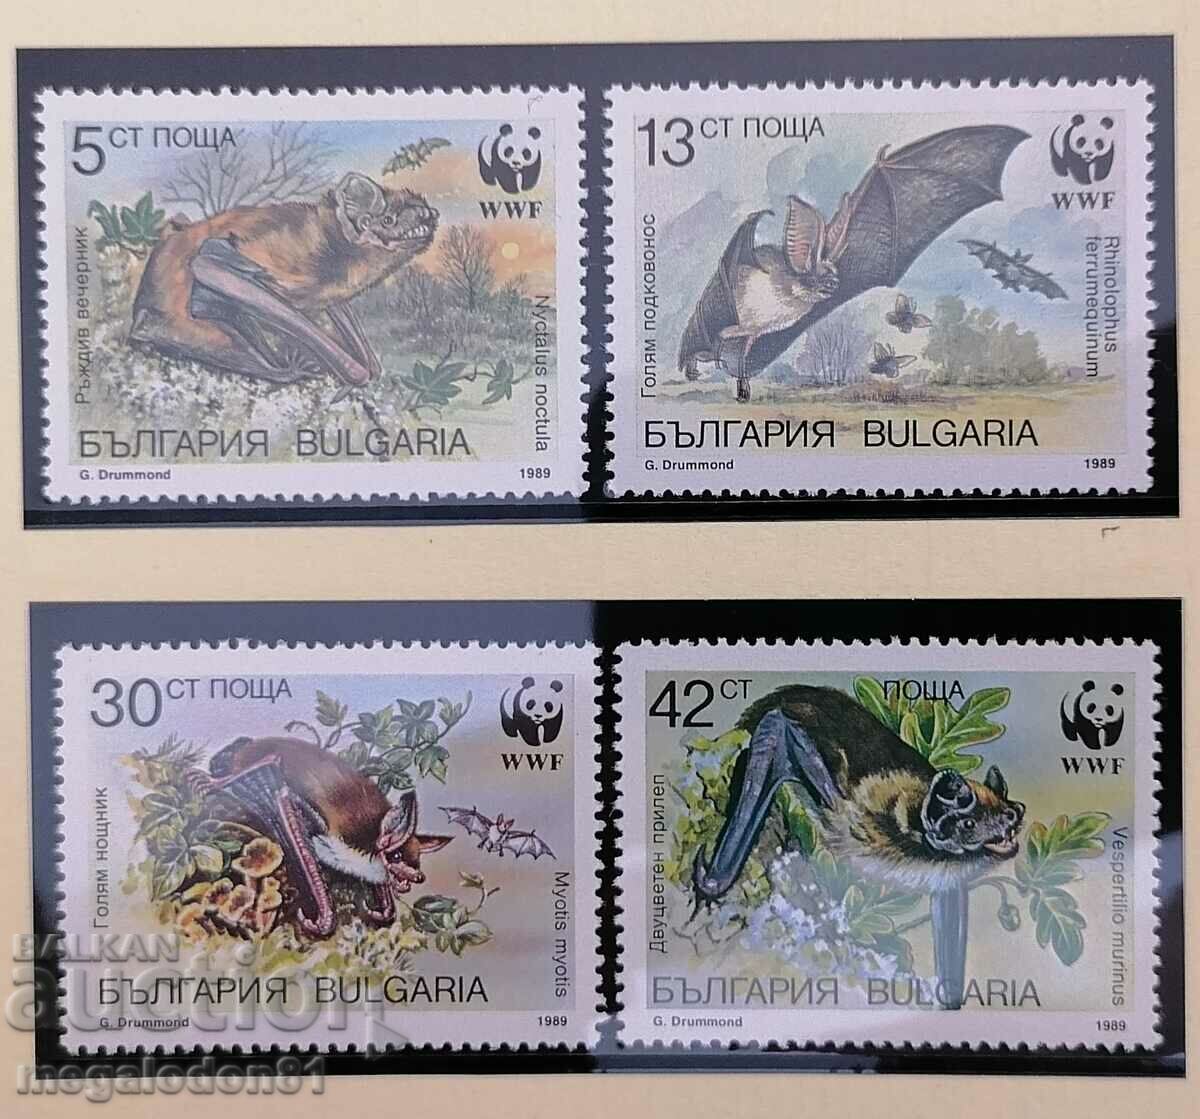 Bulgaria - fauna, bats, 1989